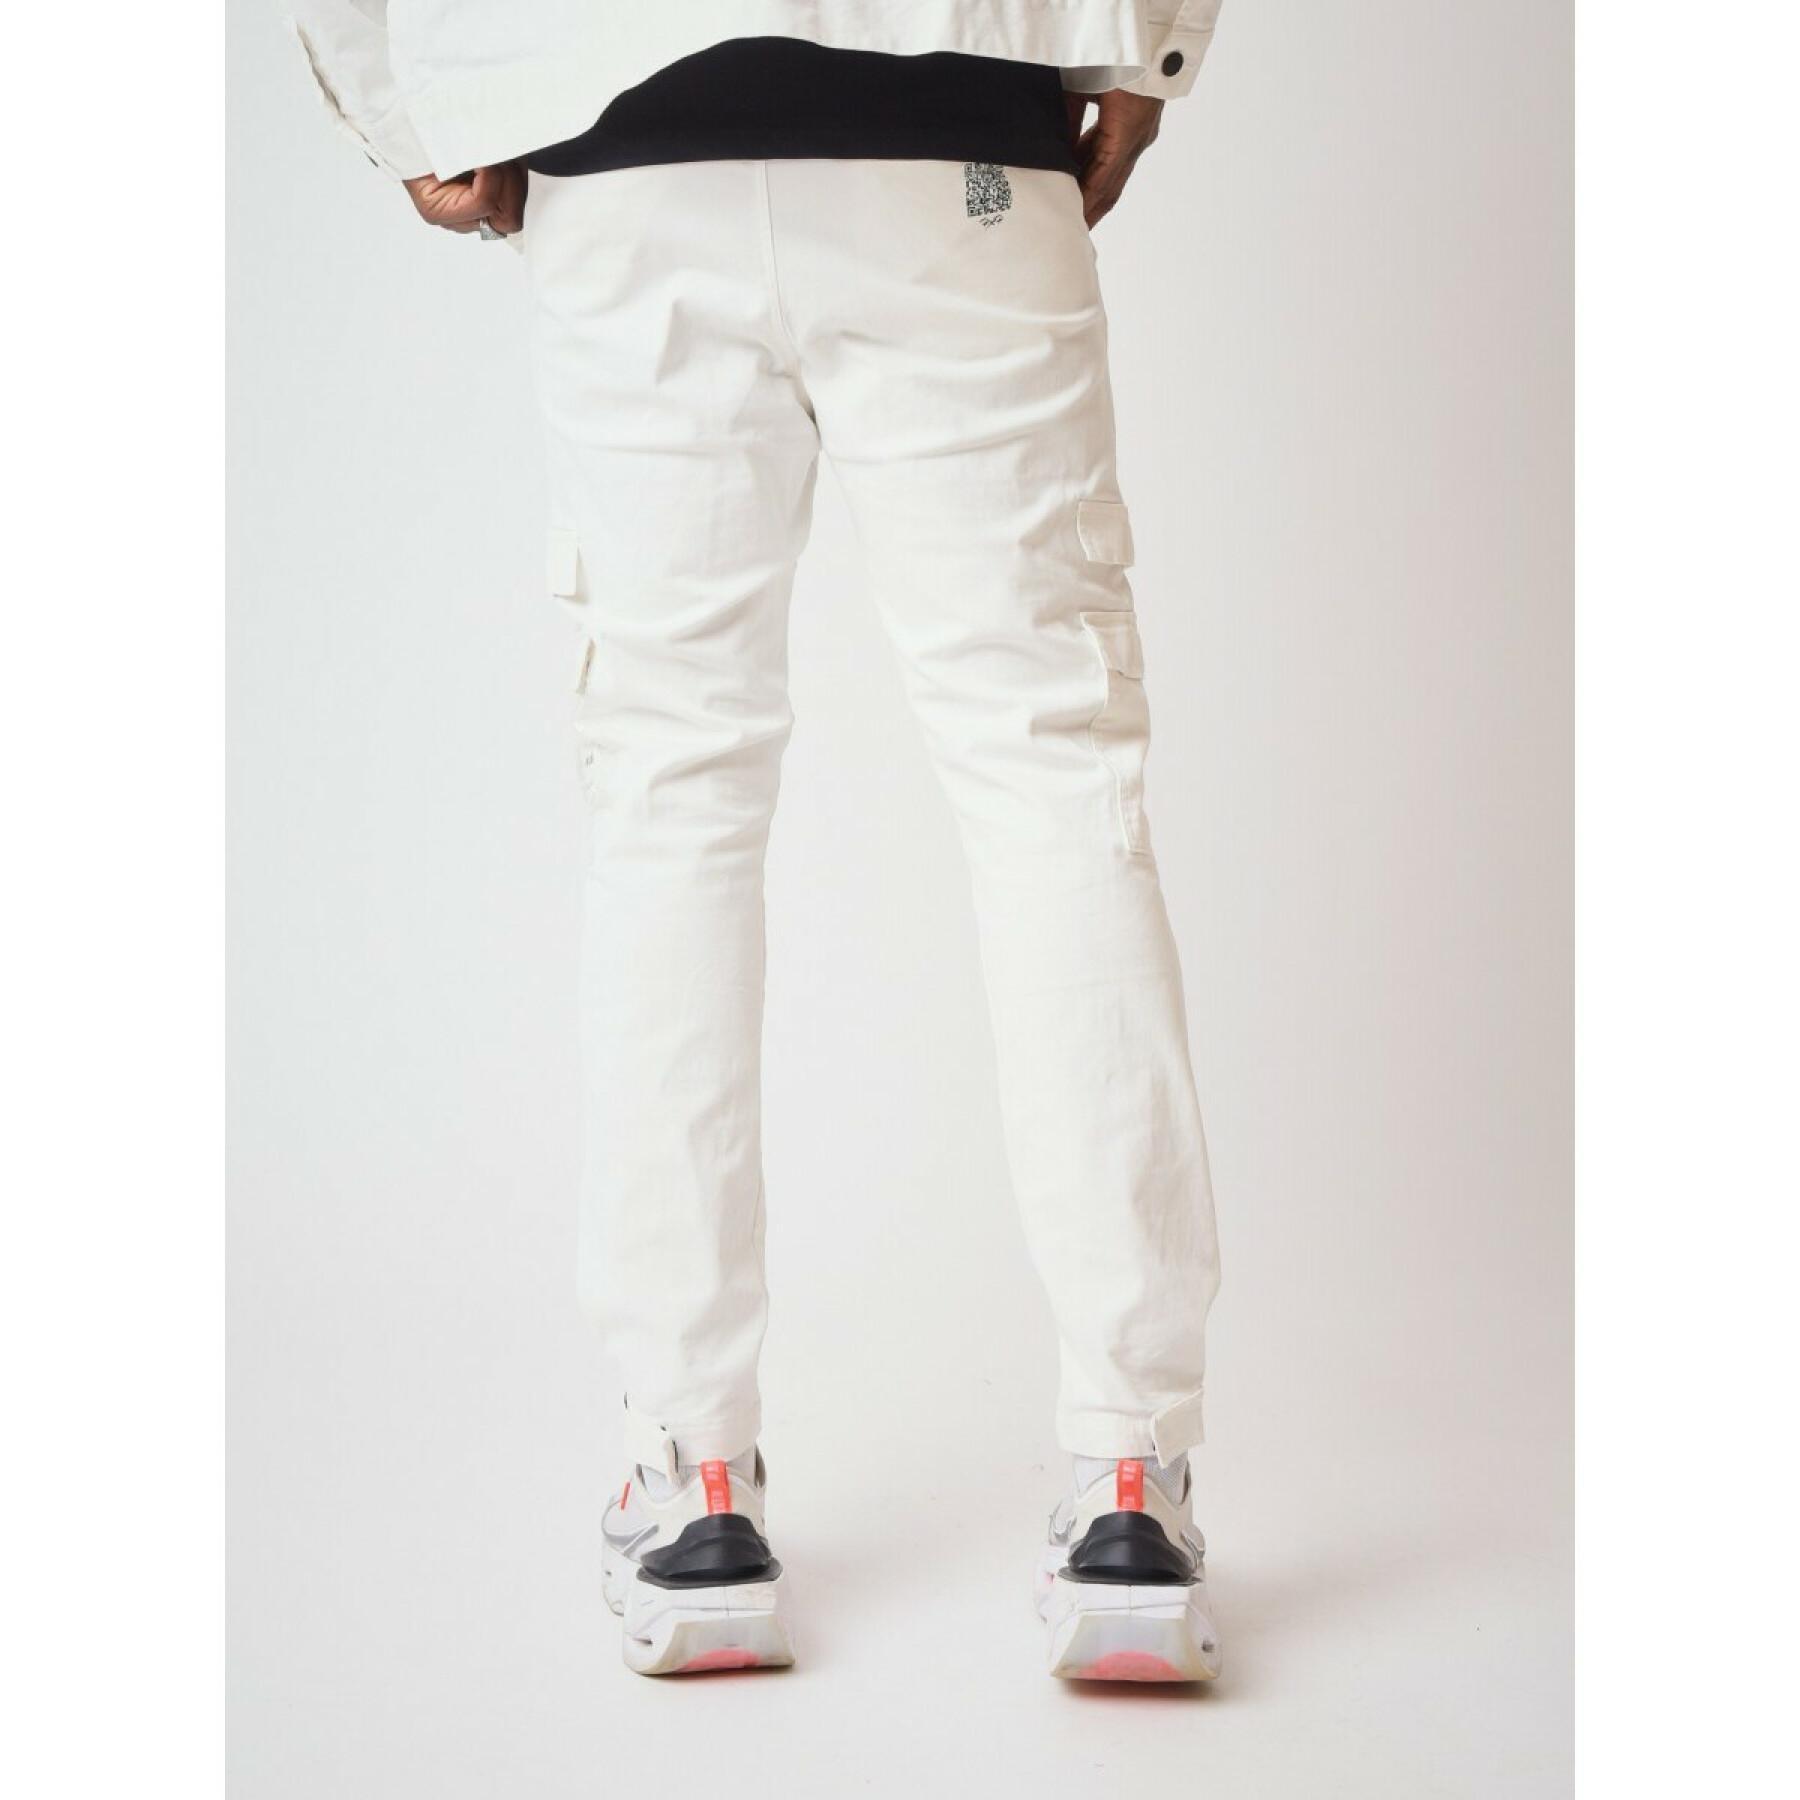 Pantaloni stile cargo con tasca trasparente Project X Paris